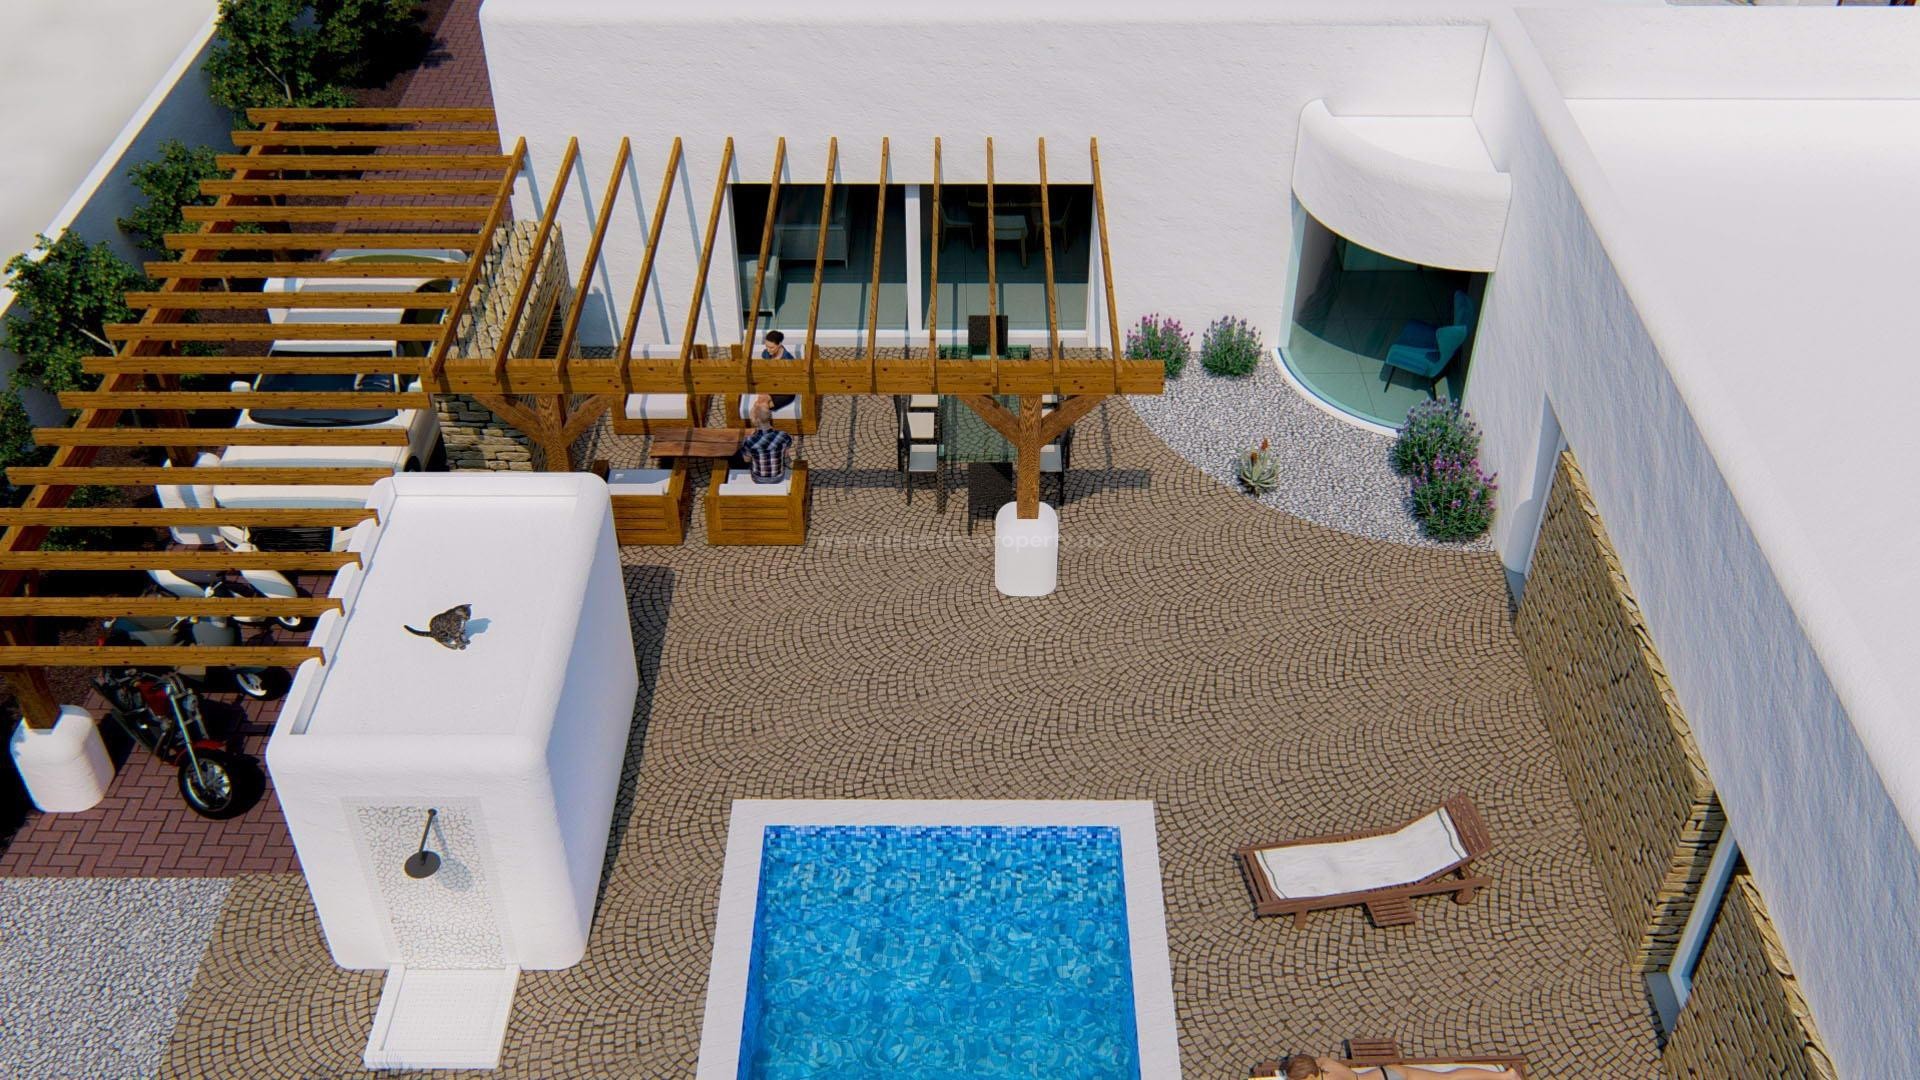 Eksklusive hus/villa i Ibiza-stil i Alfaz del Pi, 4 soverom, 2 bad, stor terrassen med bassengområdet mot sør.